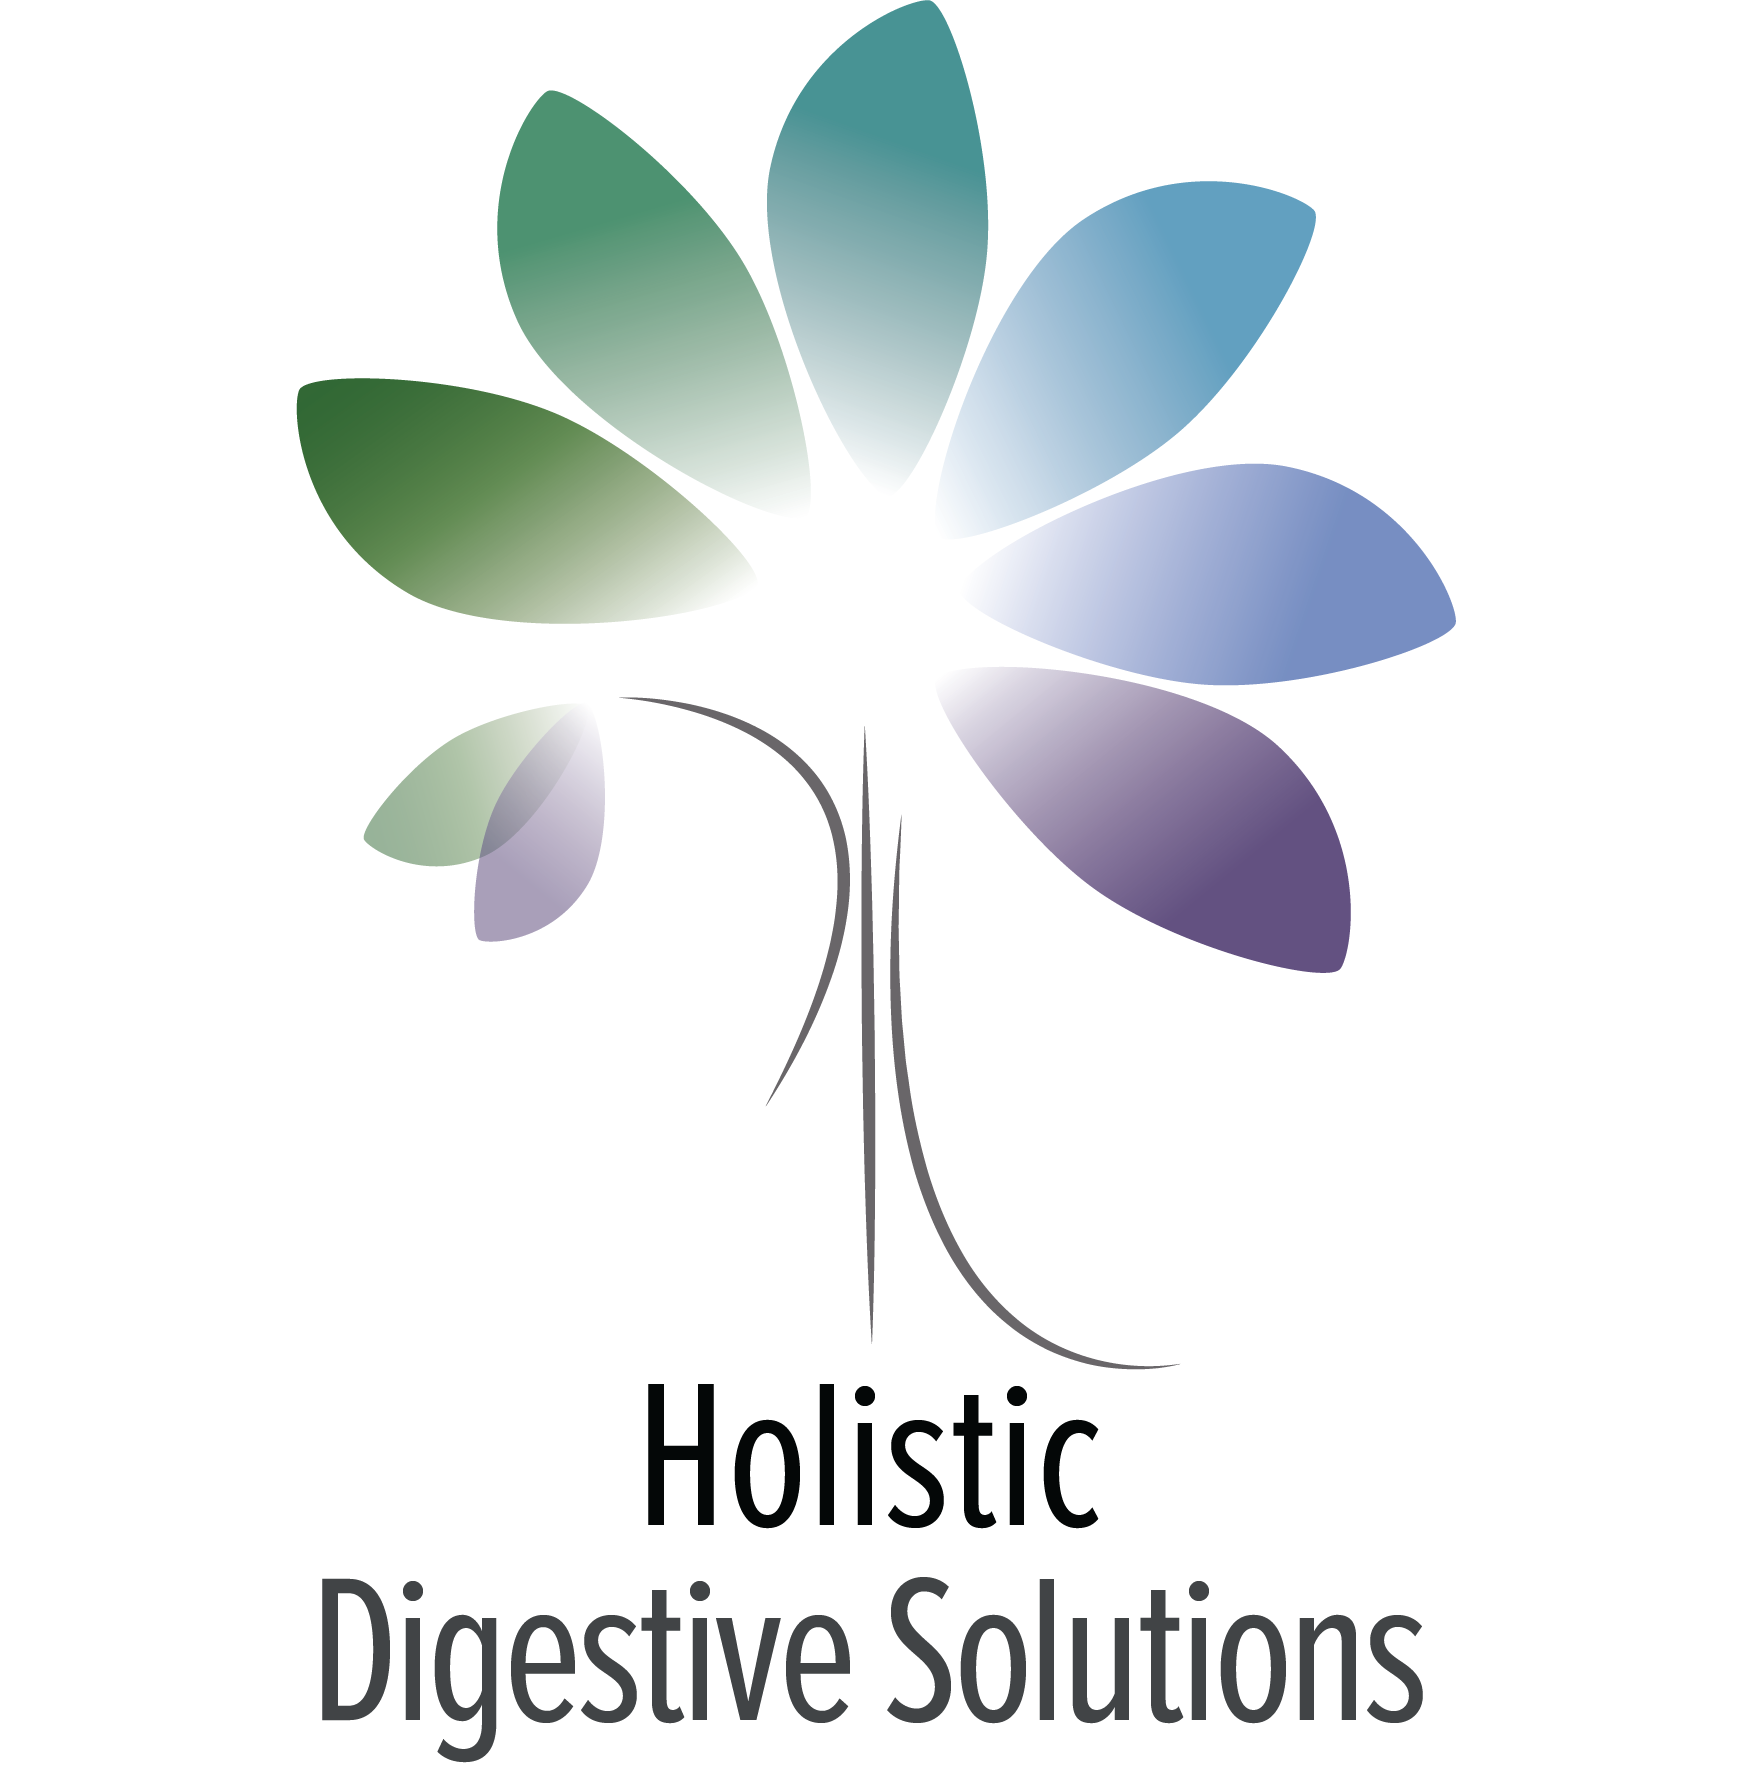 Holistic digestion solutions